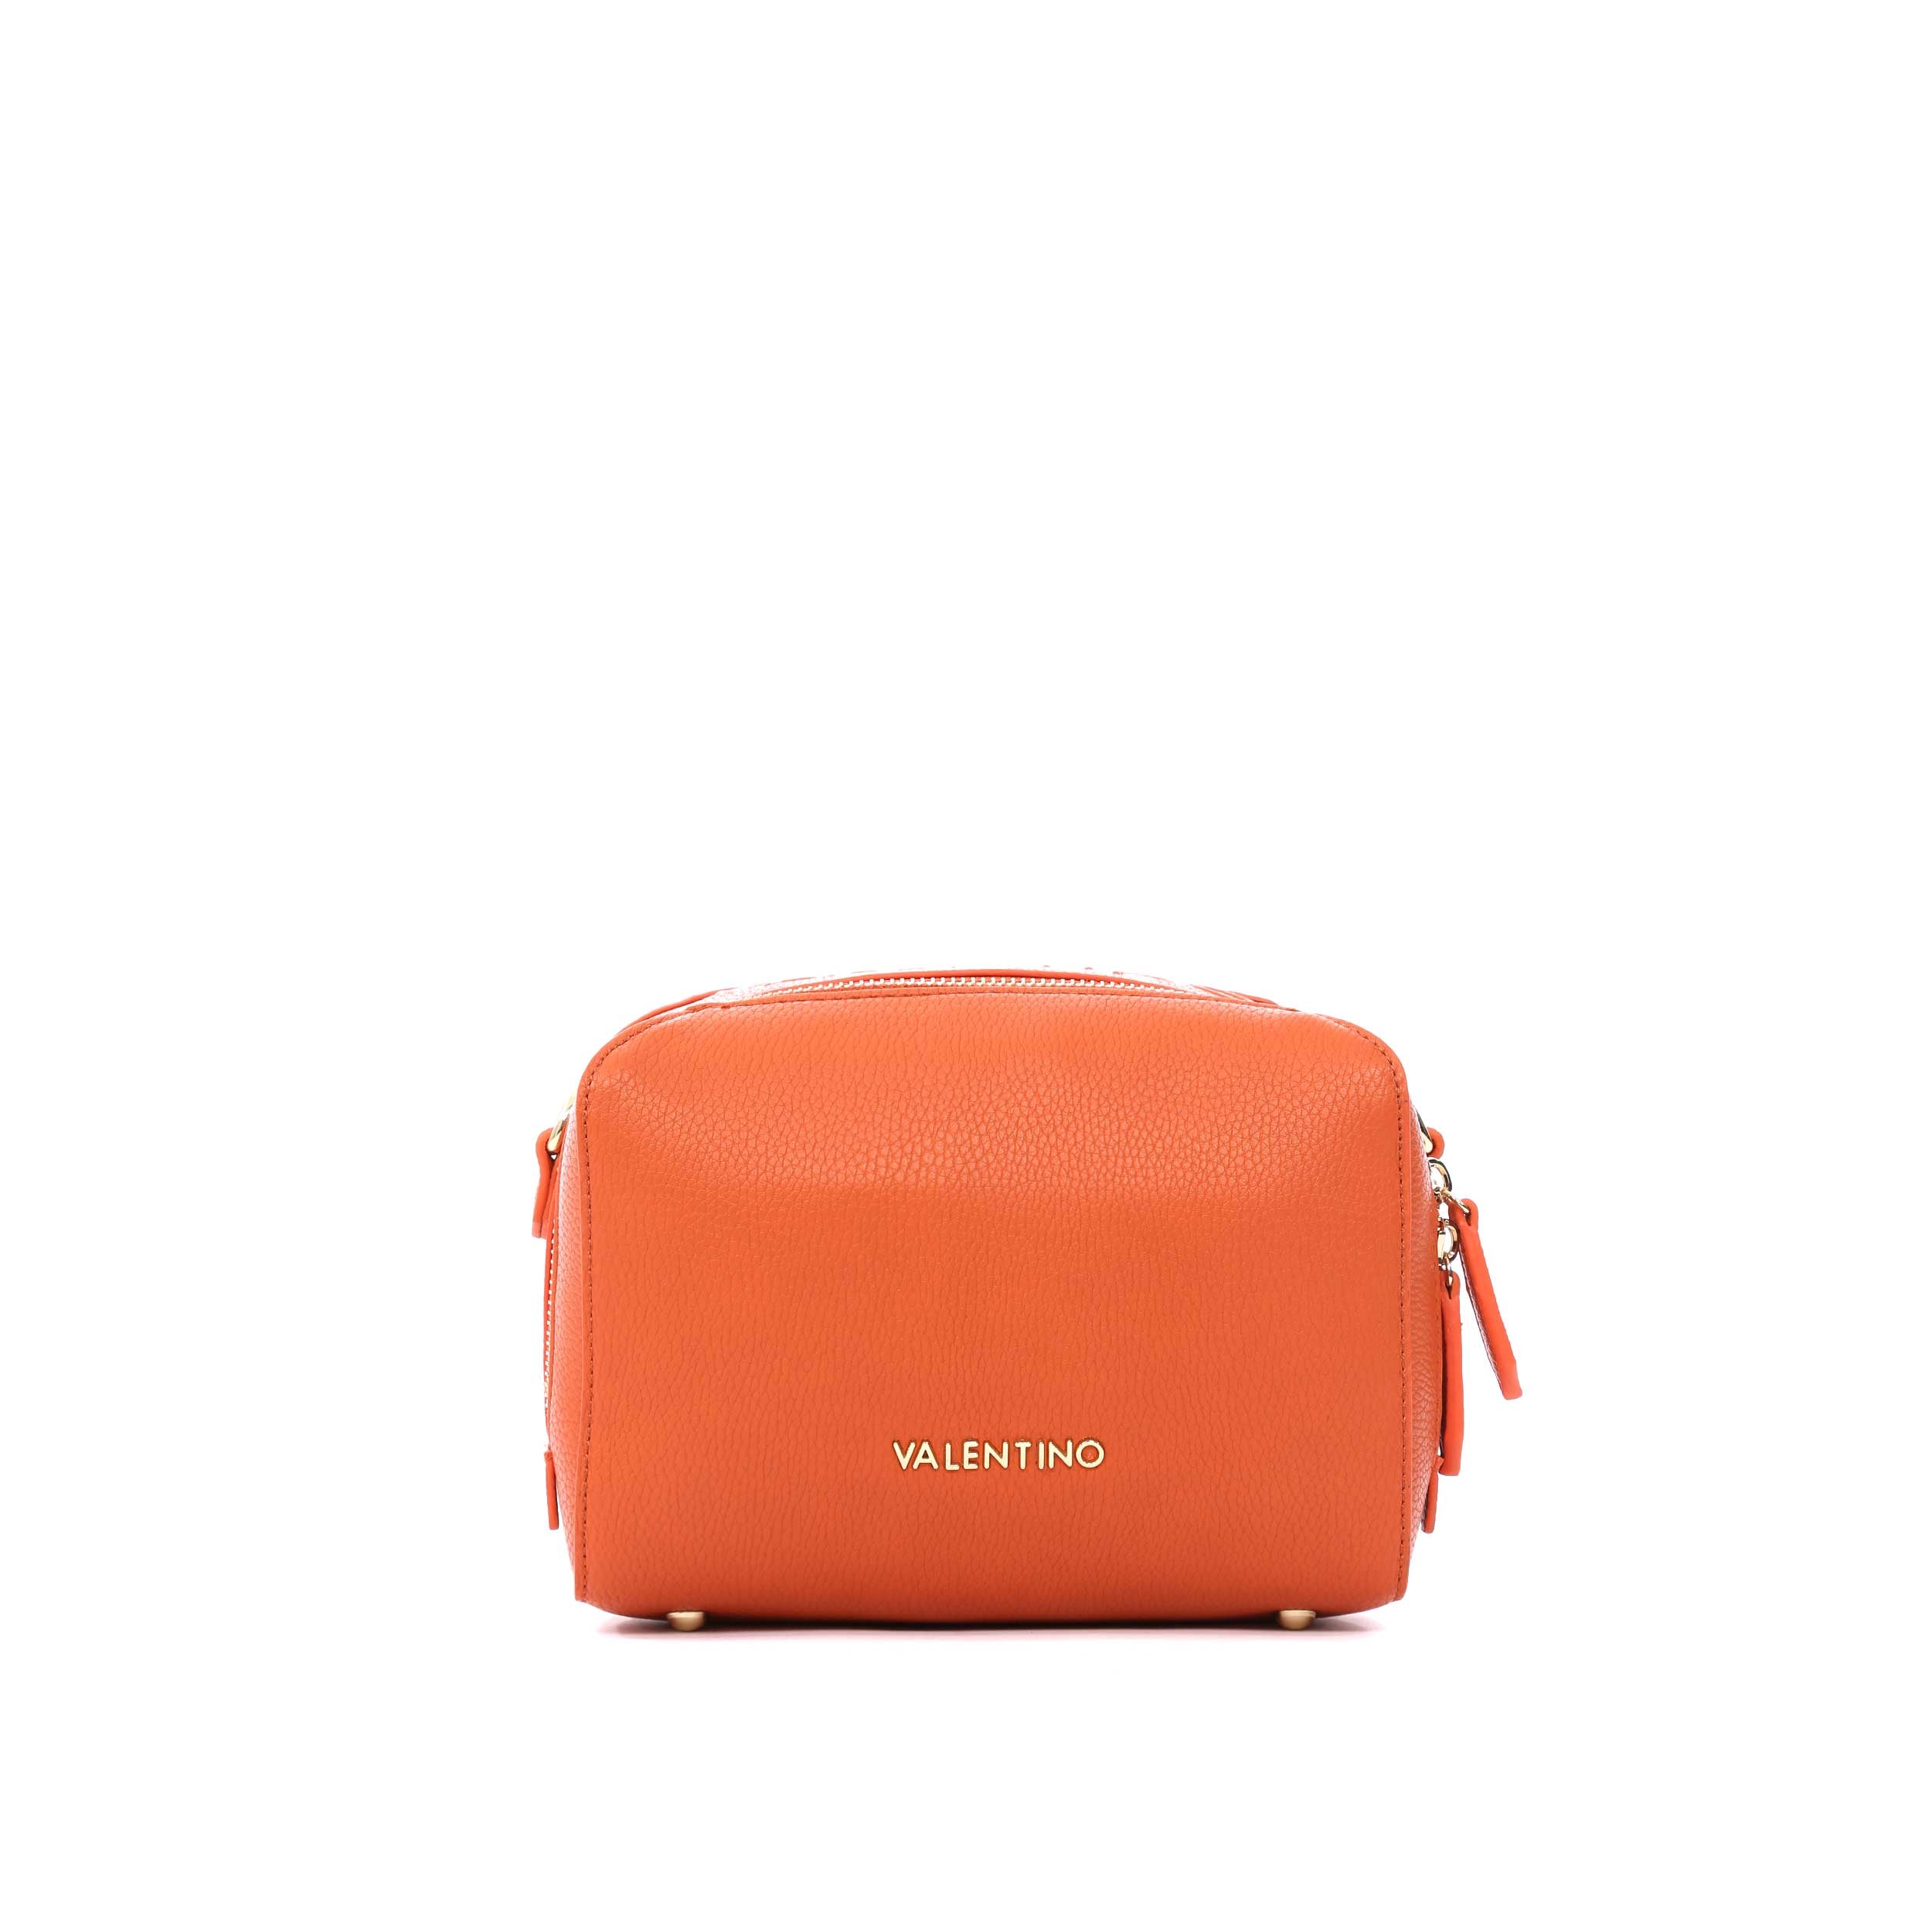 Valentino Bags Pattie Camera Bag in Arancio Orange